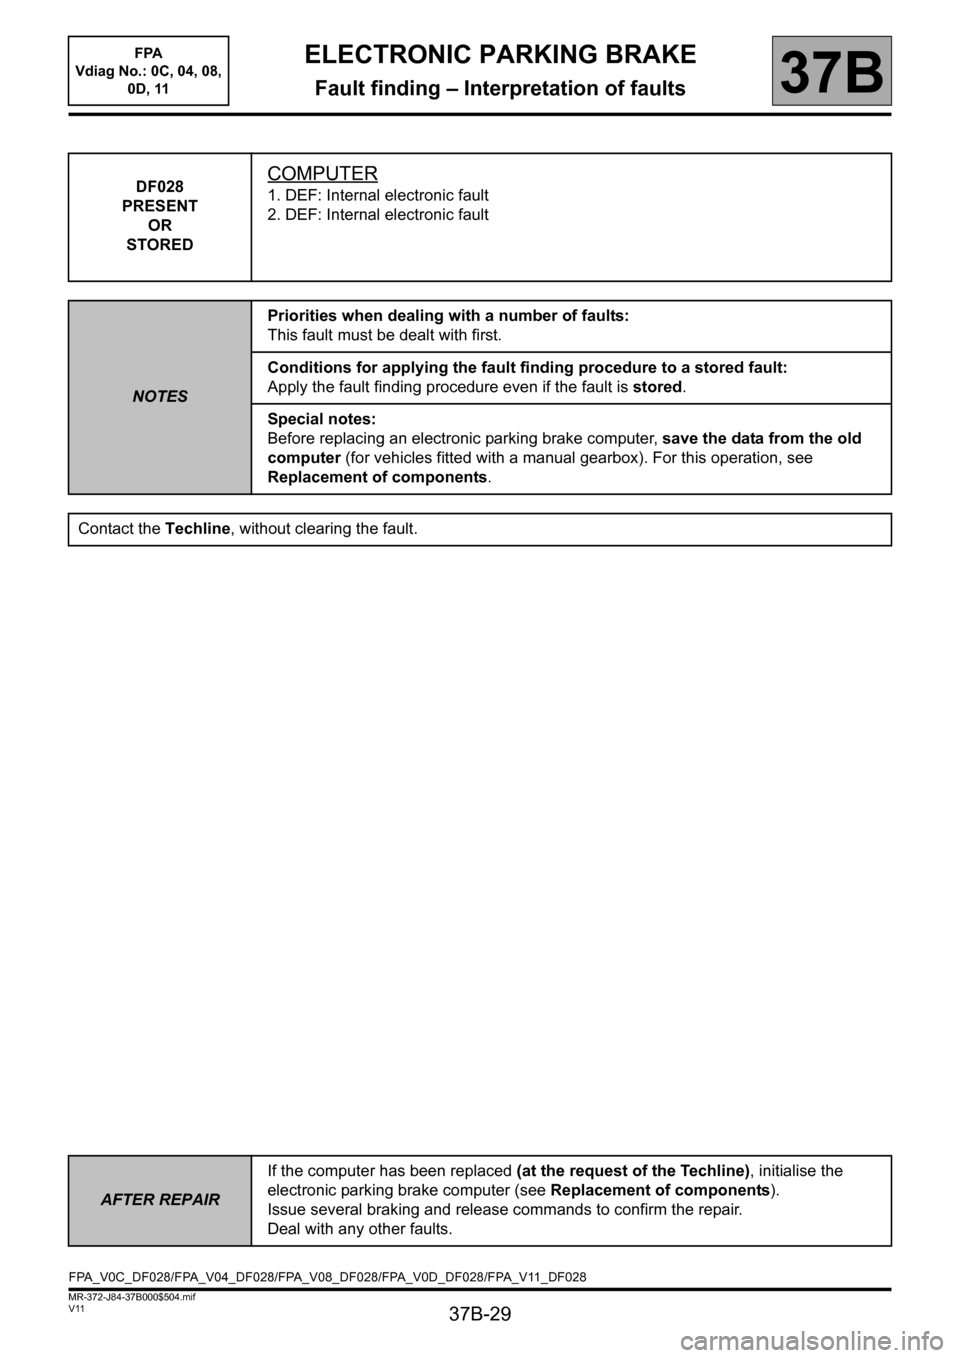 RENAULT SCENIC 2013 J95 / 3.G Electronic Parking Brake Workshop Manual 37B-29
MR-372-J84-37B000$504.mif
V11
ELECTRONIC PARKING BRAKE
Fault finding – Interpretation of faults
FPA  
Vdiag No.: 0C, 04, 08, 
0D, 11
37B
DF028
PRESENT
OR
STOREDCOMPUTER
1. DEF: Internal elect